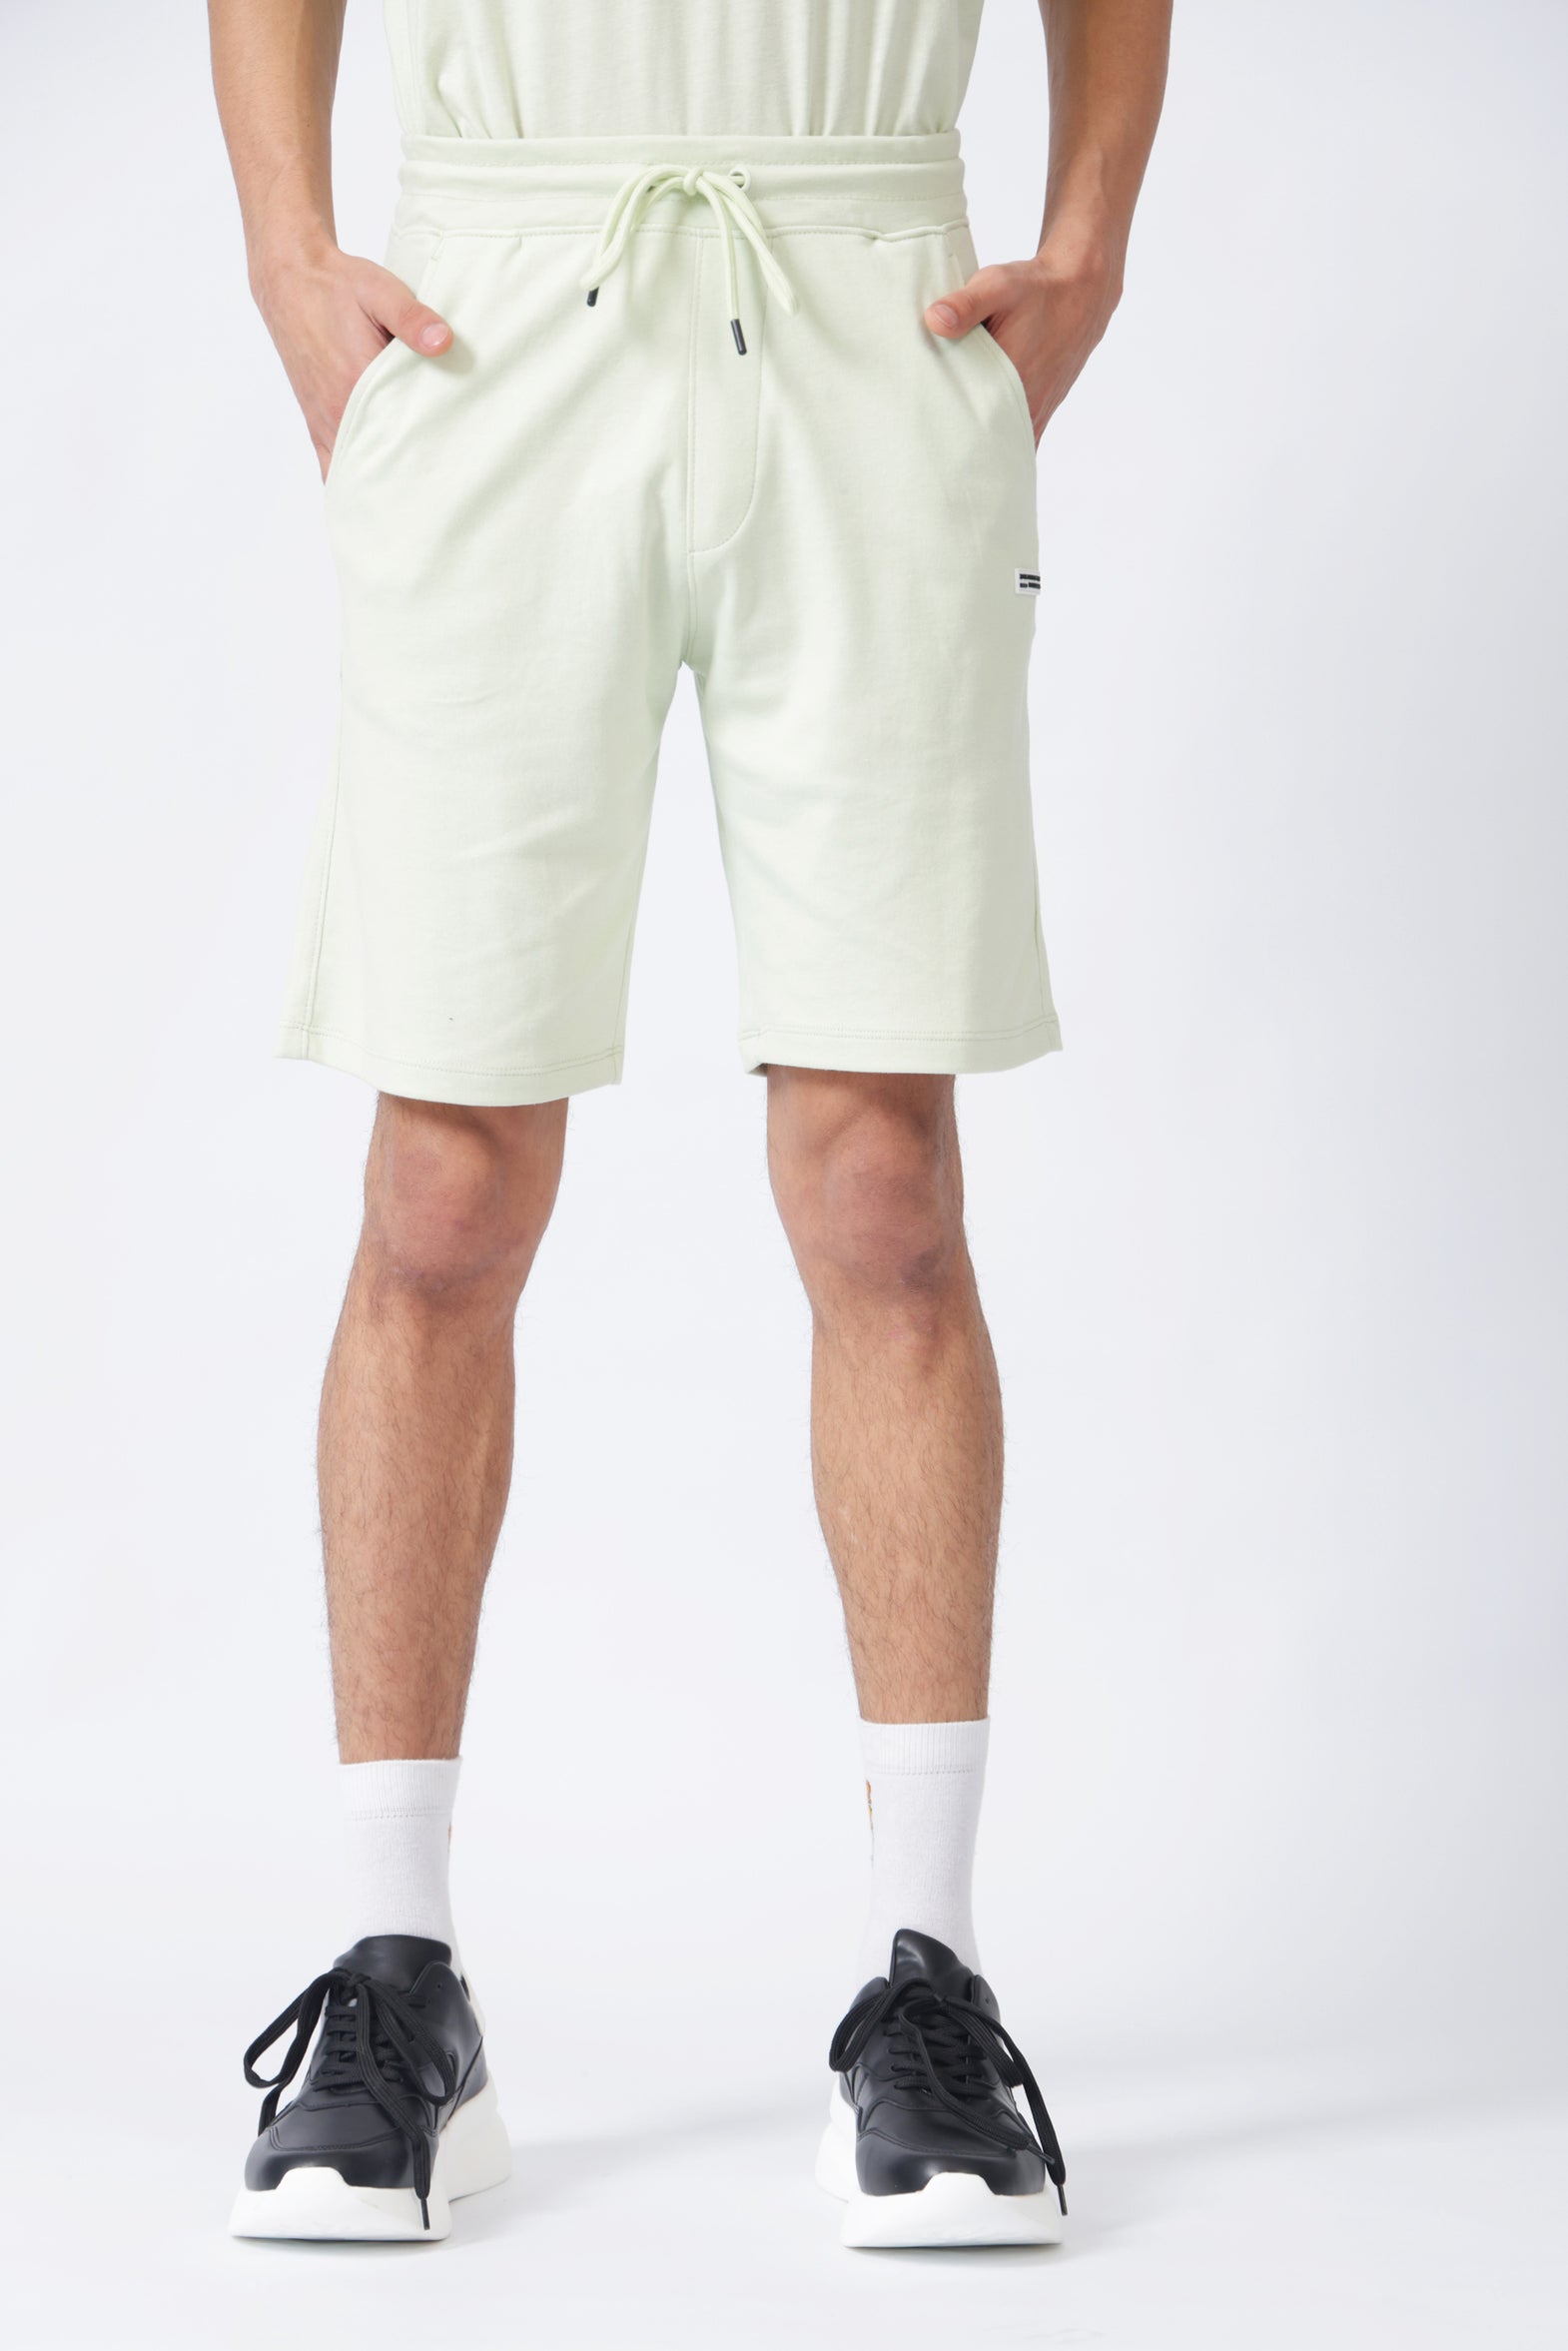 Buy Men Shorts Online – Breakout